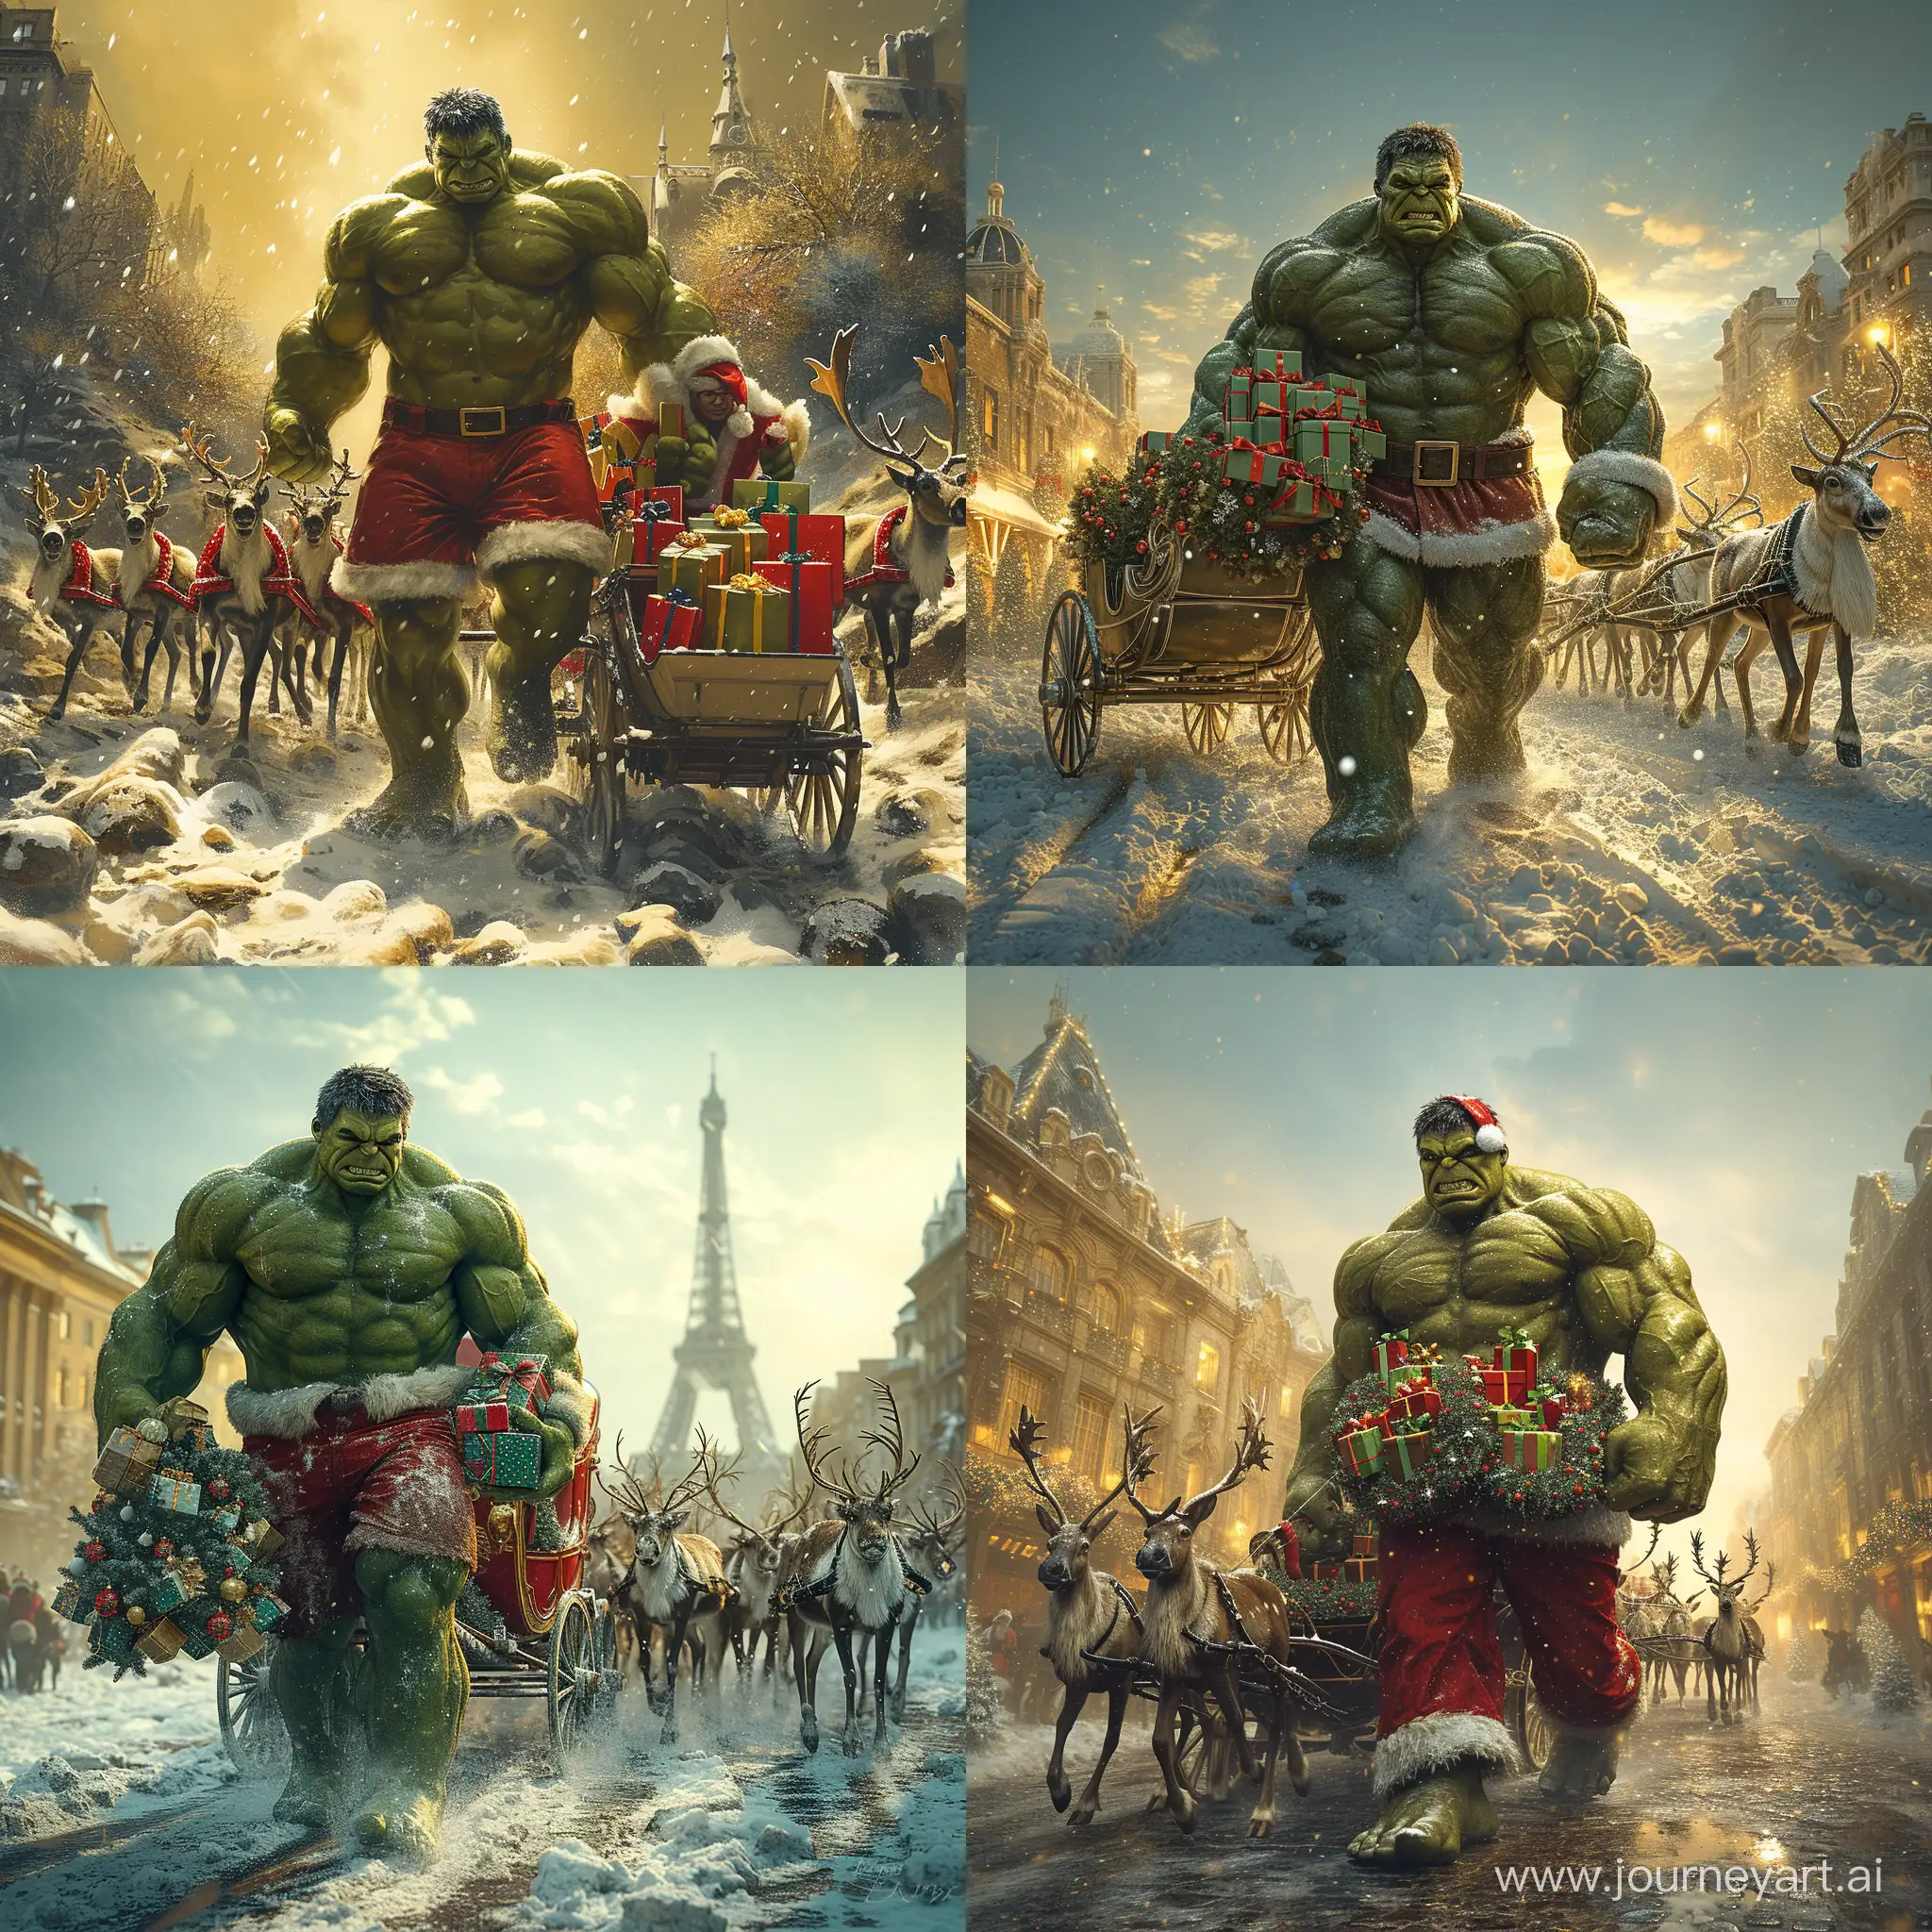 Santa-Hulk-Delivering-Gifts-with-Reindeer-Carriage